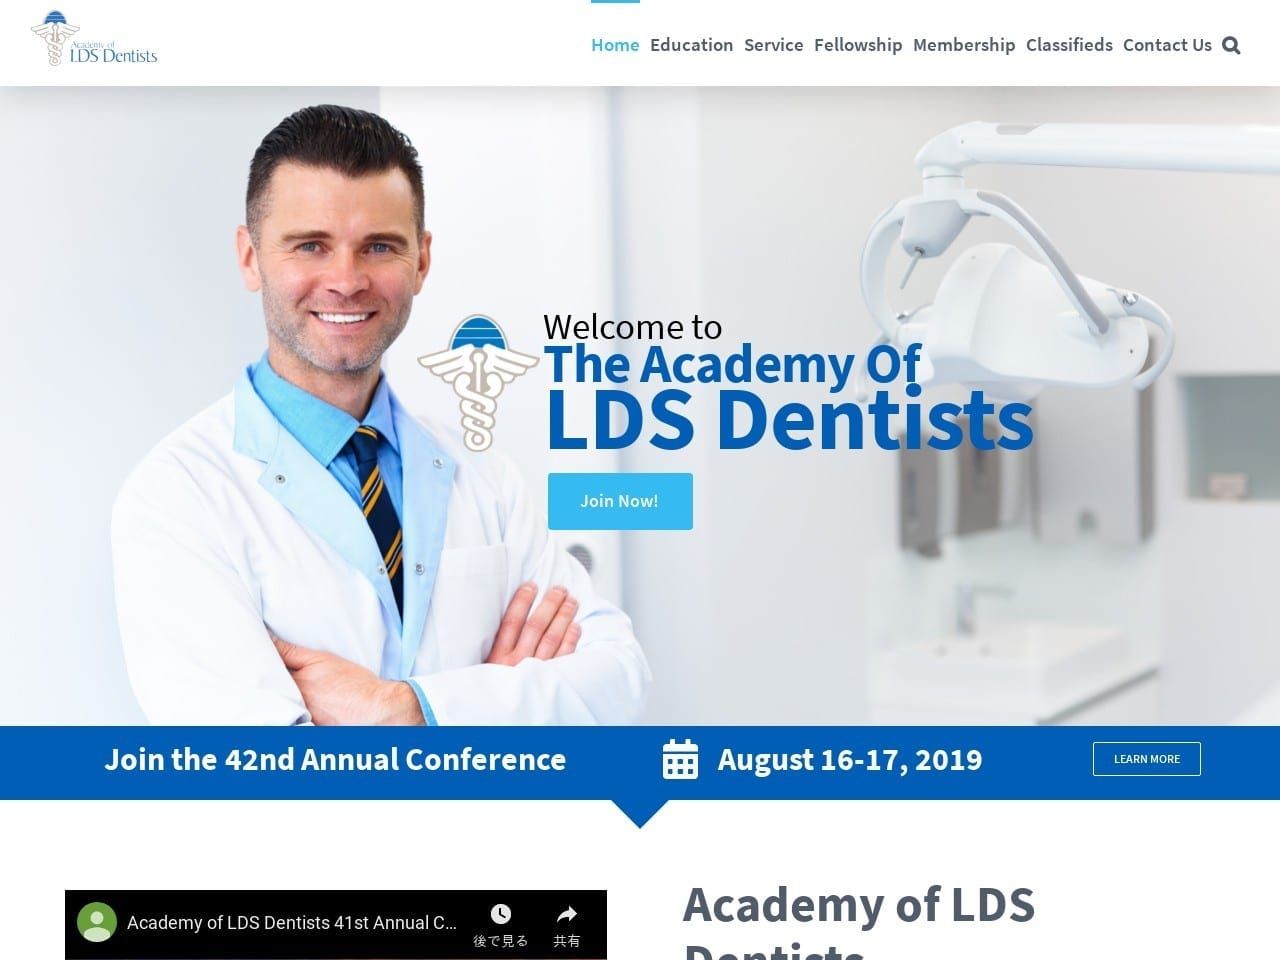 Academyoflds Dentists Website Screenshot from academyofldsdentists.com